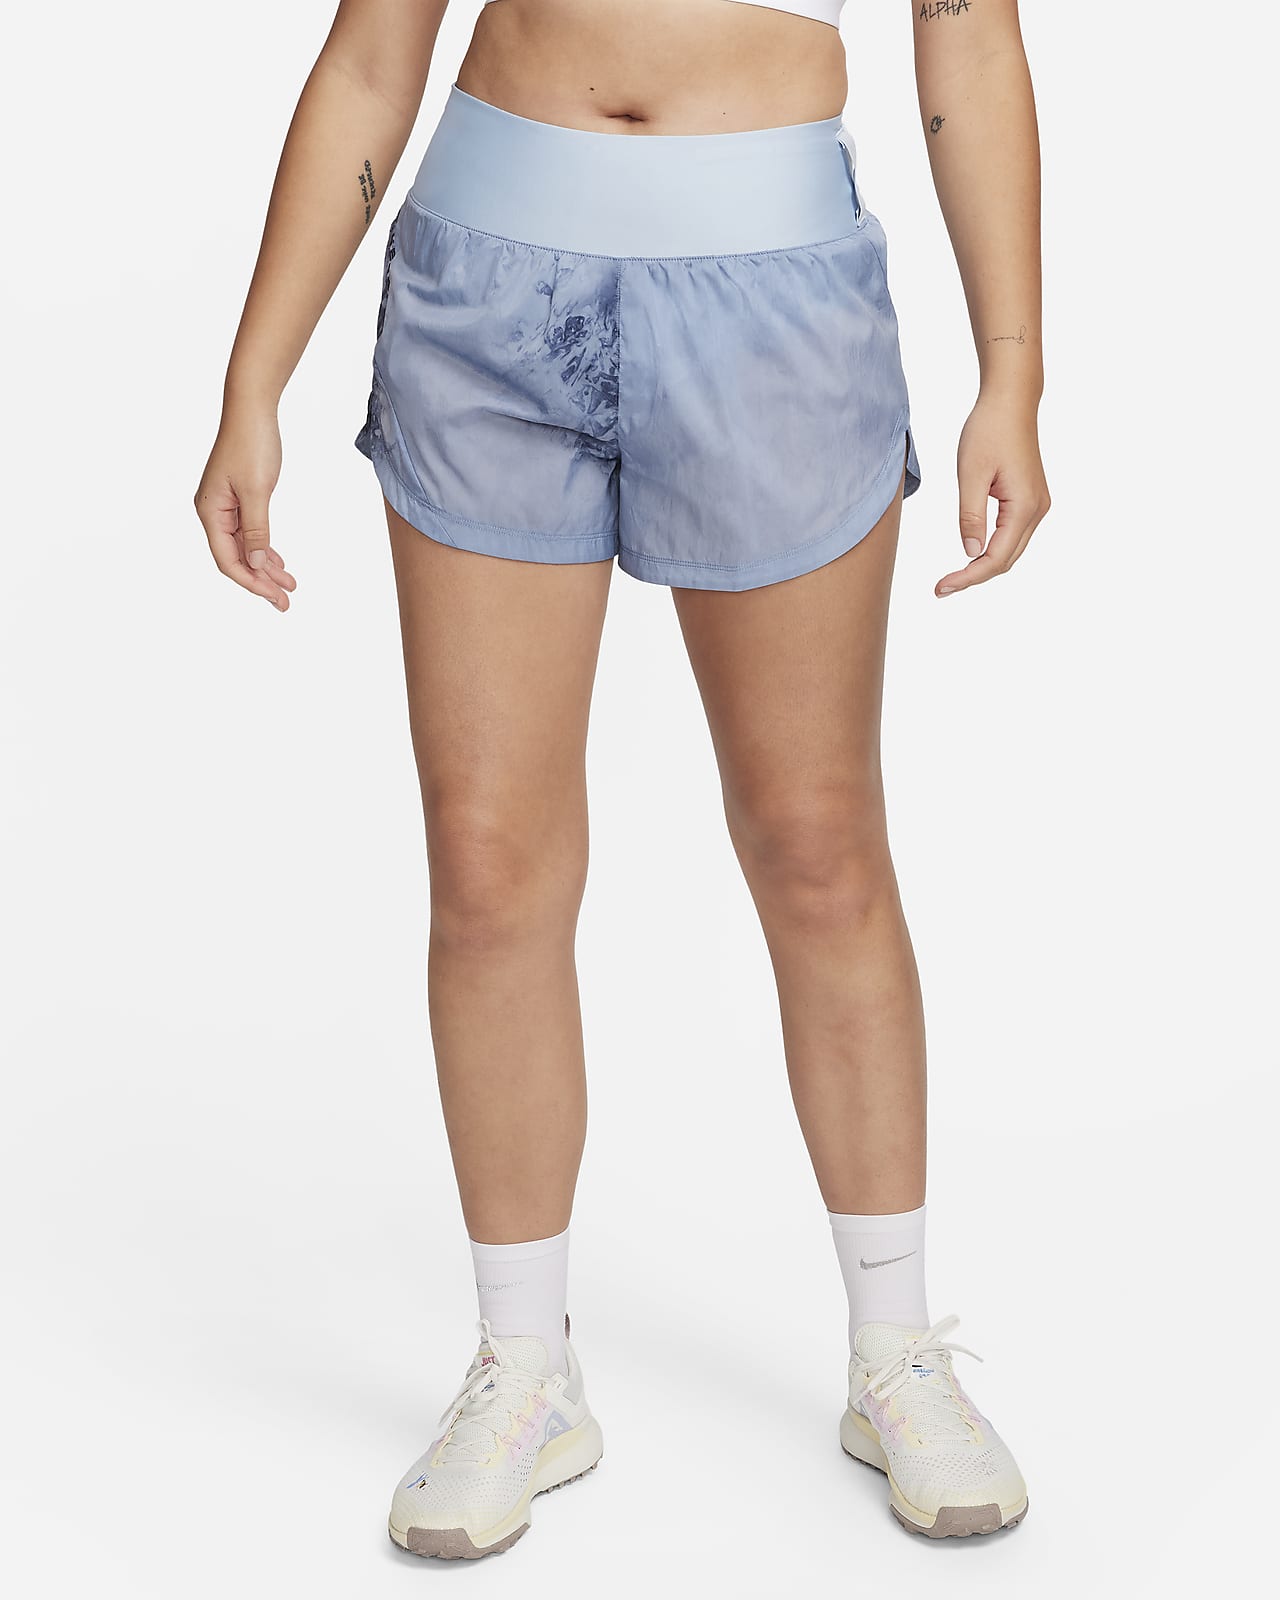 Shorts de running Repel de tiro medio de 8 cm con forro de ropa interior para mujer Nike Trail